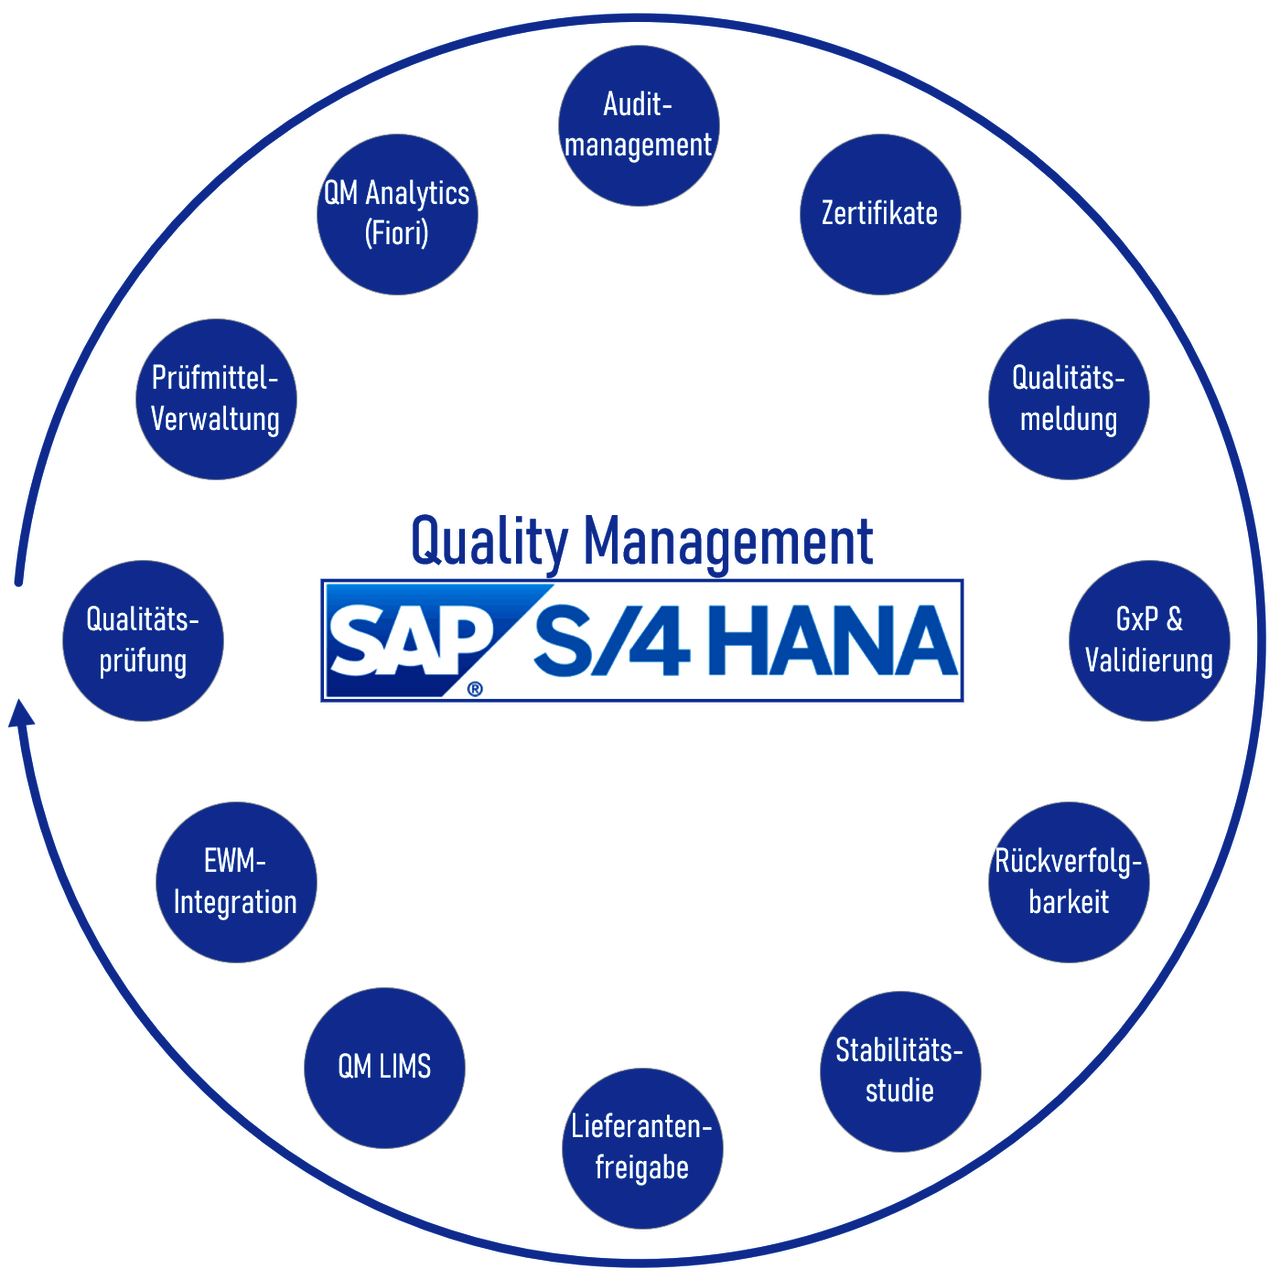 SAP QM, SAP Qualitätsmanagement, SAP Schulung, SAP Modul, SAP Beratung, SAP Consulting, SAP Training, SAP Projekt, SAP Qualitätsplanung, SAP Qualitätsprüfung, SAP Qualitätsmeldung, SAP Nonconformance Management, SAP Qualitätslenkung, SAP Audit Management, SAP Zertifikate, SAP Prüfmittelverwaltung, SAP GxP, SAP Validierung, SAP LIMS, SAP EWM, SAP Rückverfolgung, SAP Stabilitätsstudie, SAP QM S4/HANA, SAP Lieferantenfreigabe, SAP QM prüflos, SAP QM Prüfarten, SAP QM Prozesse, SAP QM Prüfpunkte, SAP QM Ergebniserfassung, SAP QM Sample, SAP QM Probenverwaltung, SAP QM Berater, SAP QM Auftrag, SAP QM Infosatz, SAP QM Ergebnisse, SAP QM Verwendungsentscheid, SAP QM Audit, SAP QM Consultant, SAP QM Defect Recording, SAP QM FMEA, SAP QM Customizing, SAP QM Notification, SAP QM Stichprobenverfahren, SAP QM Verwendungsentscheid, SAP QM Usage Decision, SAP QM Vendor Evaluation, SAP QM Workflow, SAP QM Zeugnis